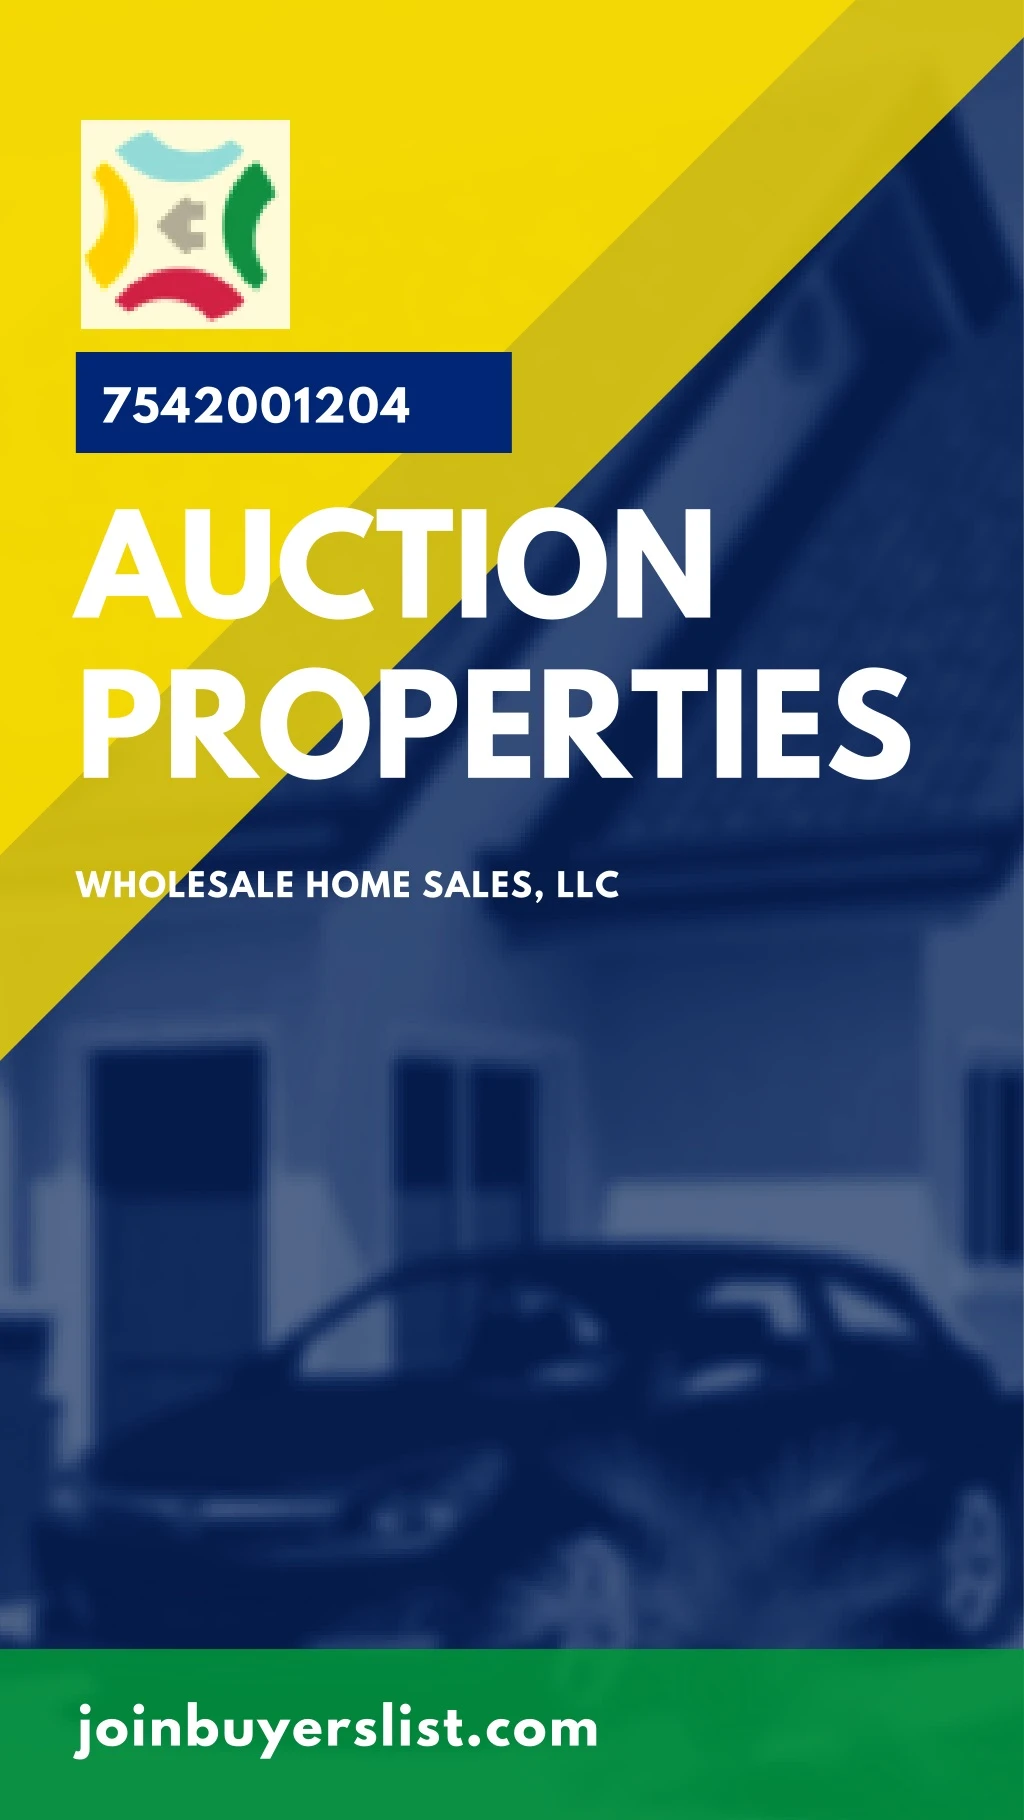 7542001204 auction properties